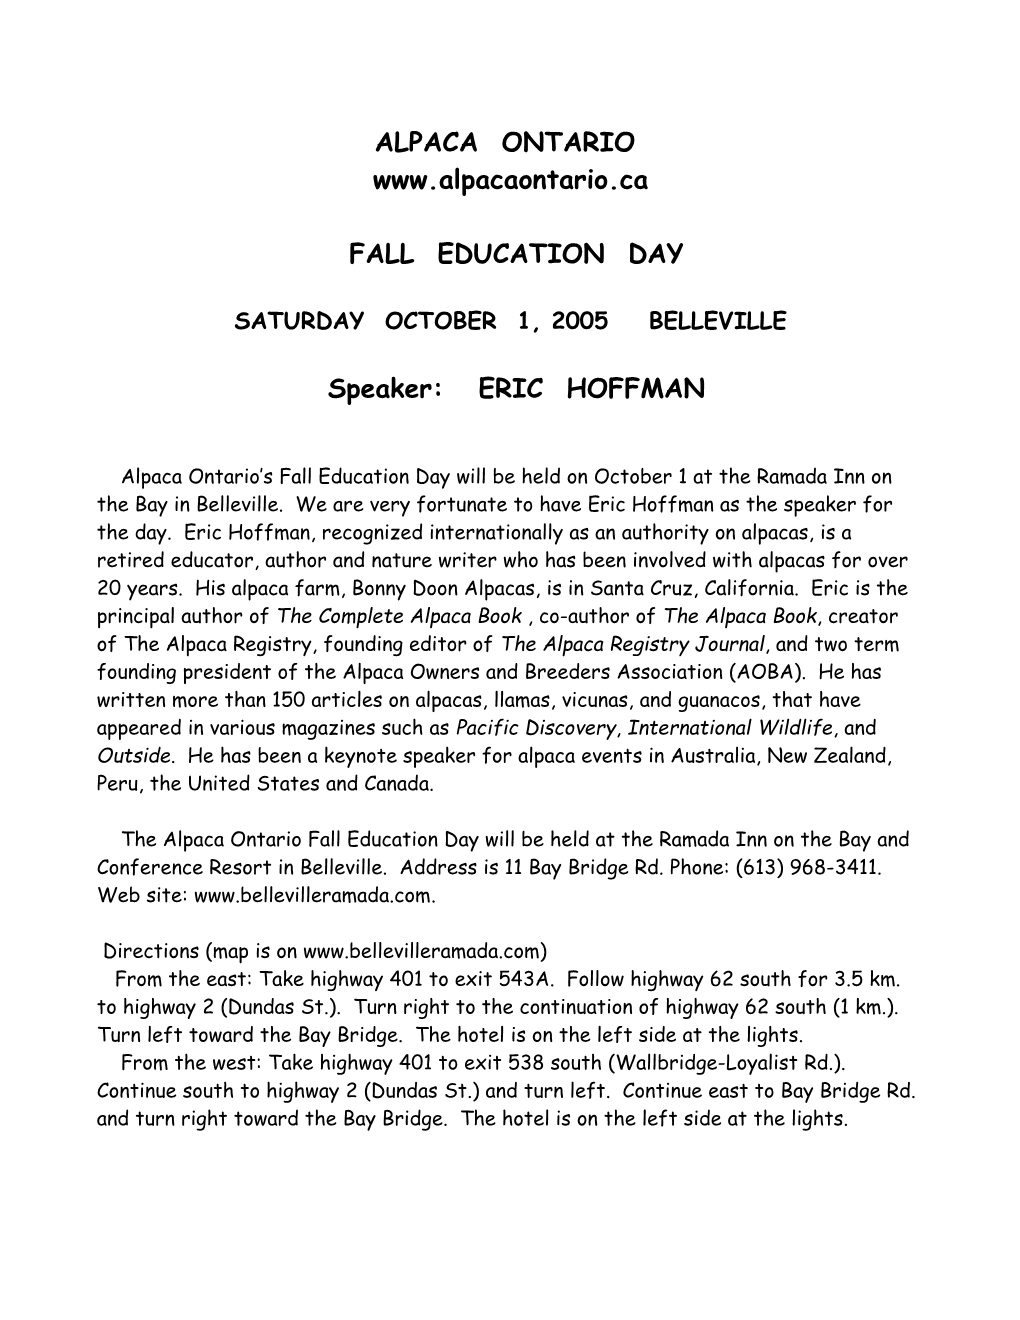 Alpaca Ontario Fall Education Day